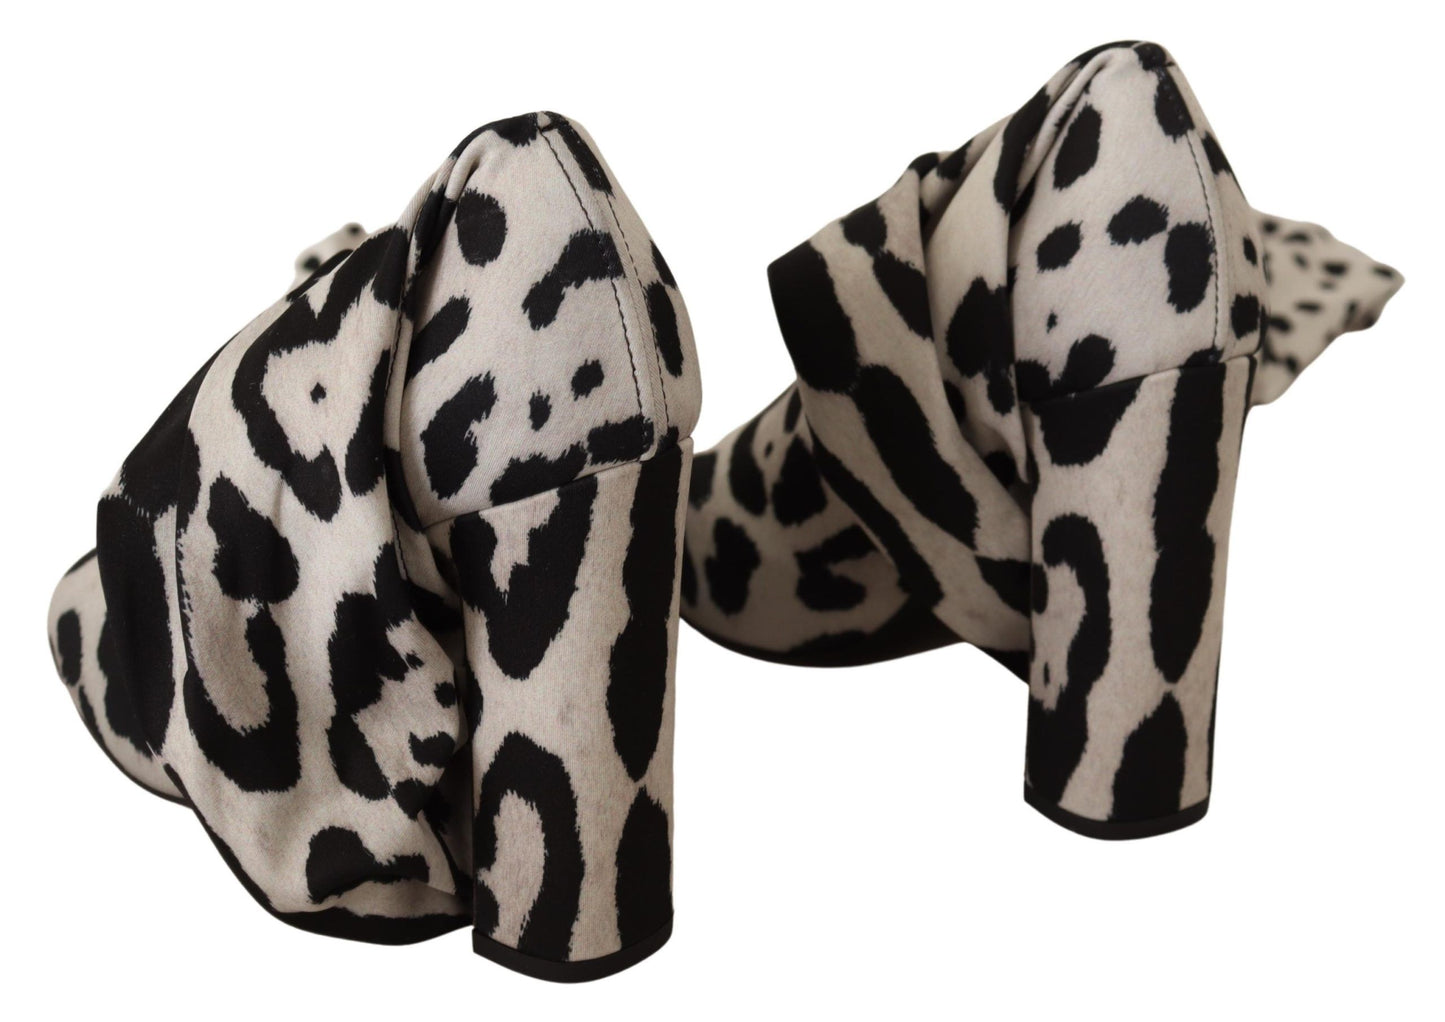 Dolce & Gabbana White Black Leopard Stretch Long Boots